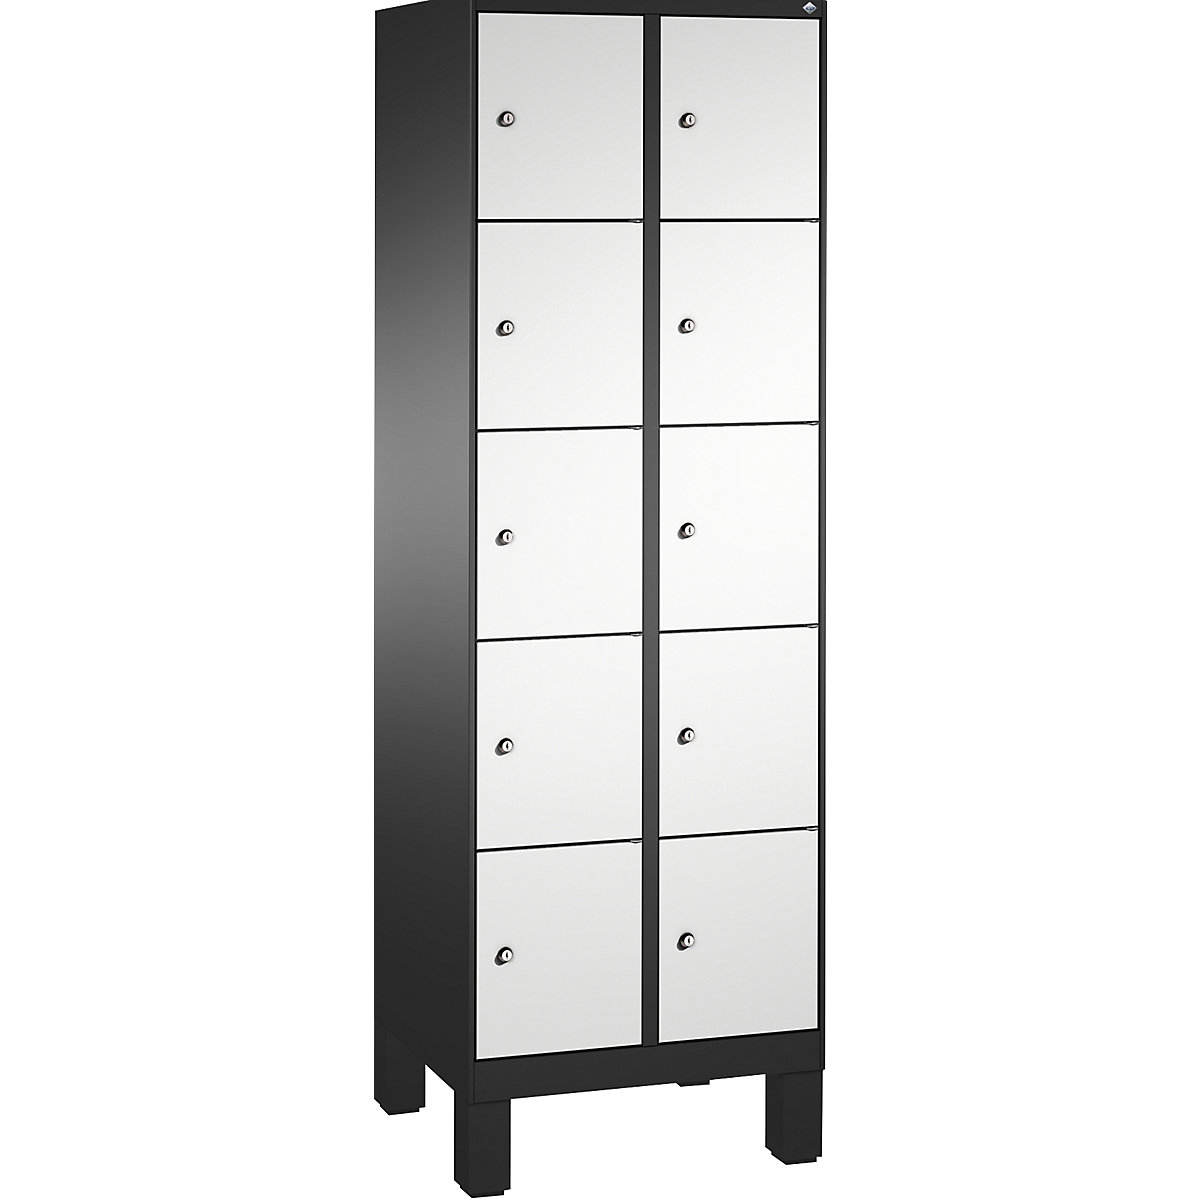 EVOLO locker unit, with feet – C+P, 2 compartments, 5 shelf compartments each, compartment width 300 mm, black grey / light grey-9